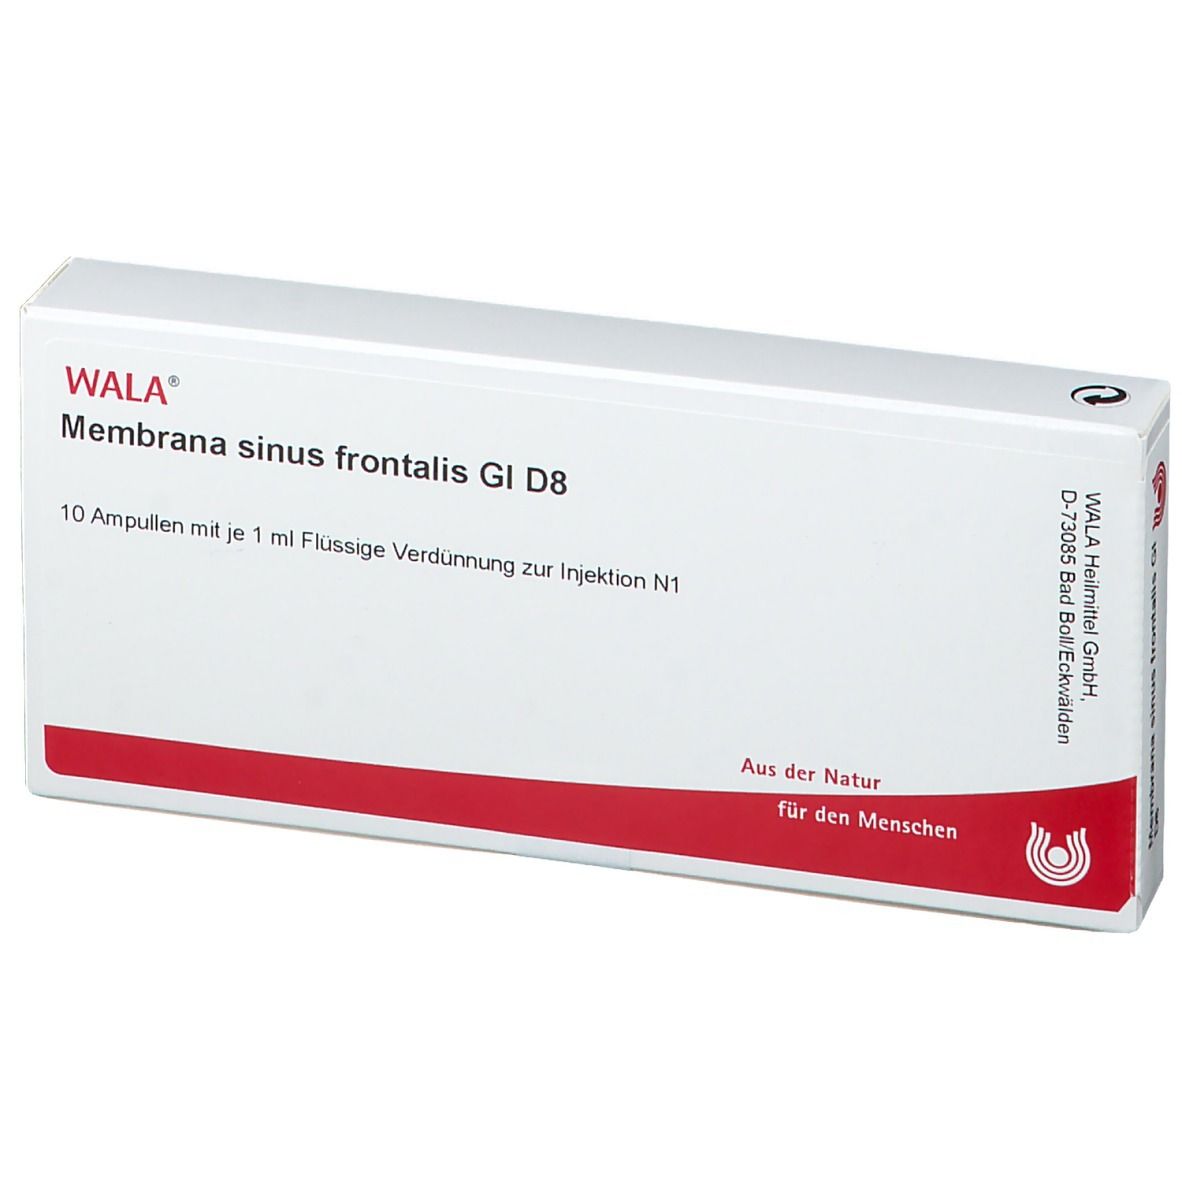 WALA® Membrana sinus frontalis Gl D 8